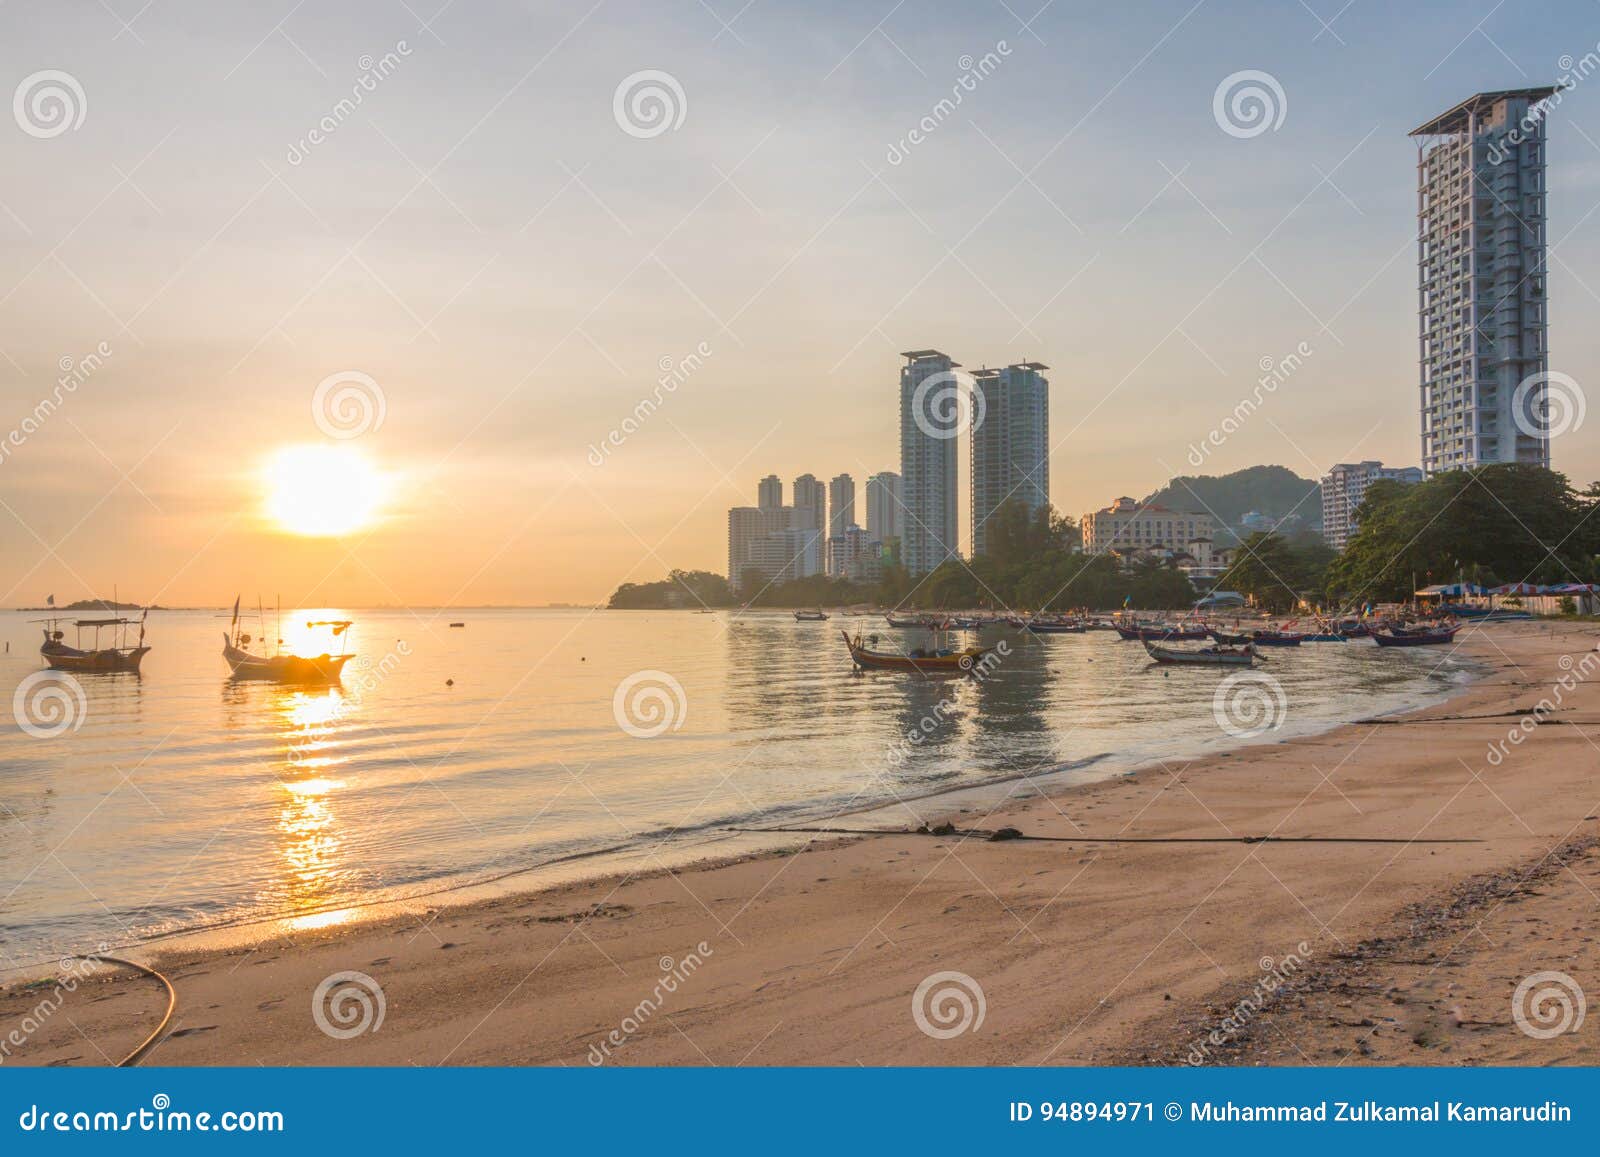 Sunrise At The Coast Of Tanjung Bungah Penang Malaysia Stock Image Image Of Penang Shot 94894971